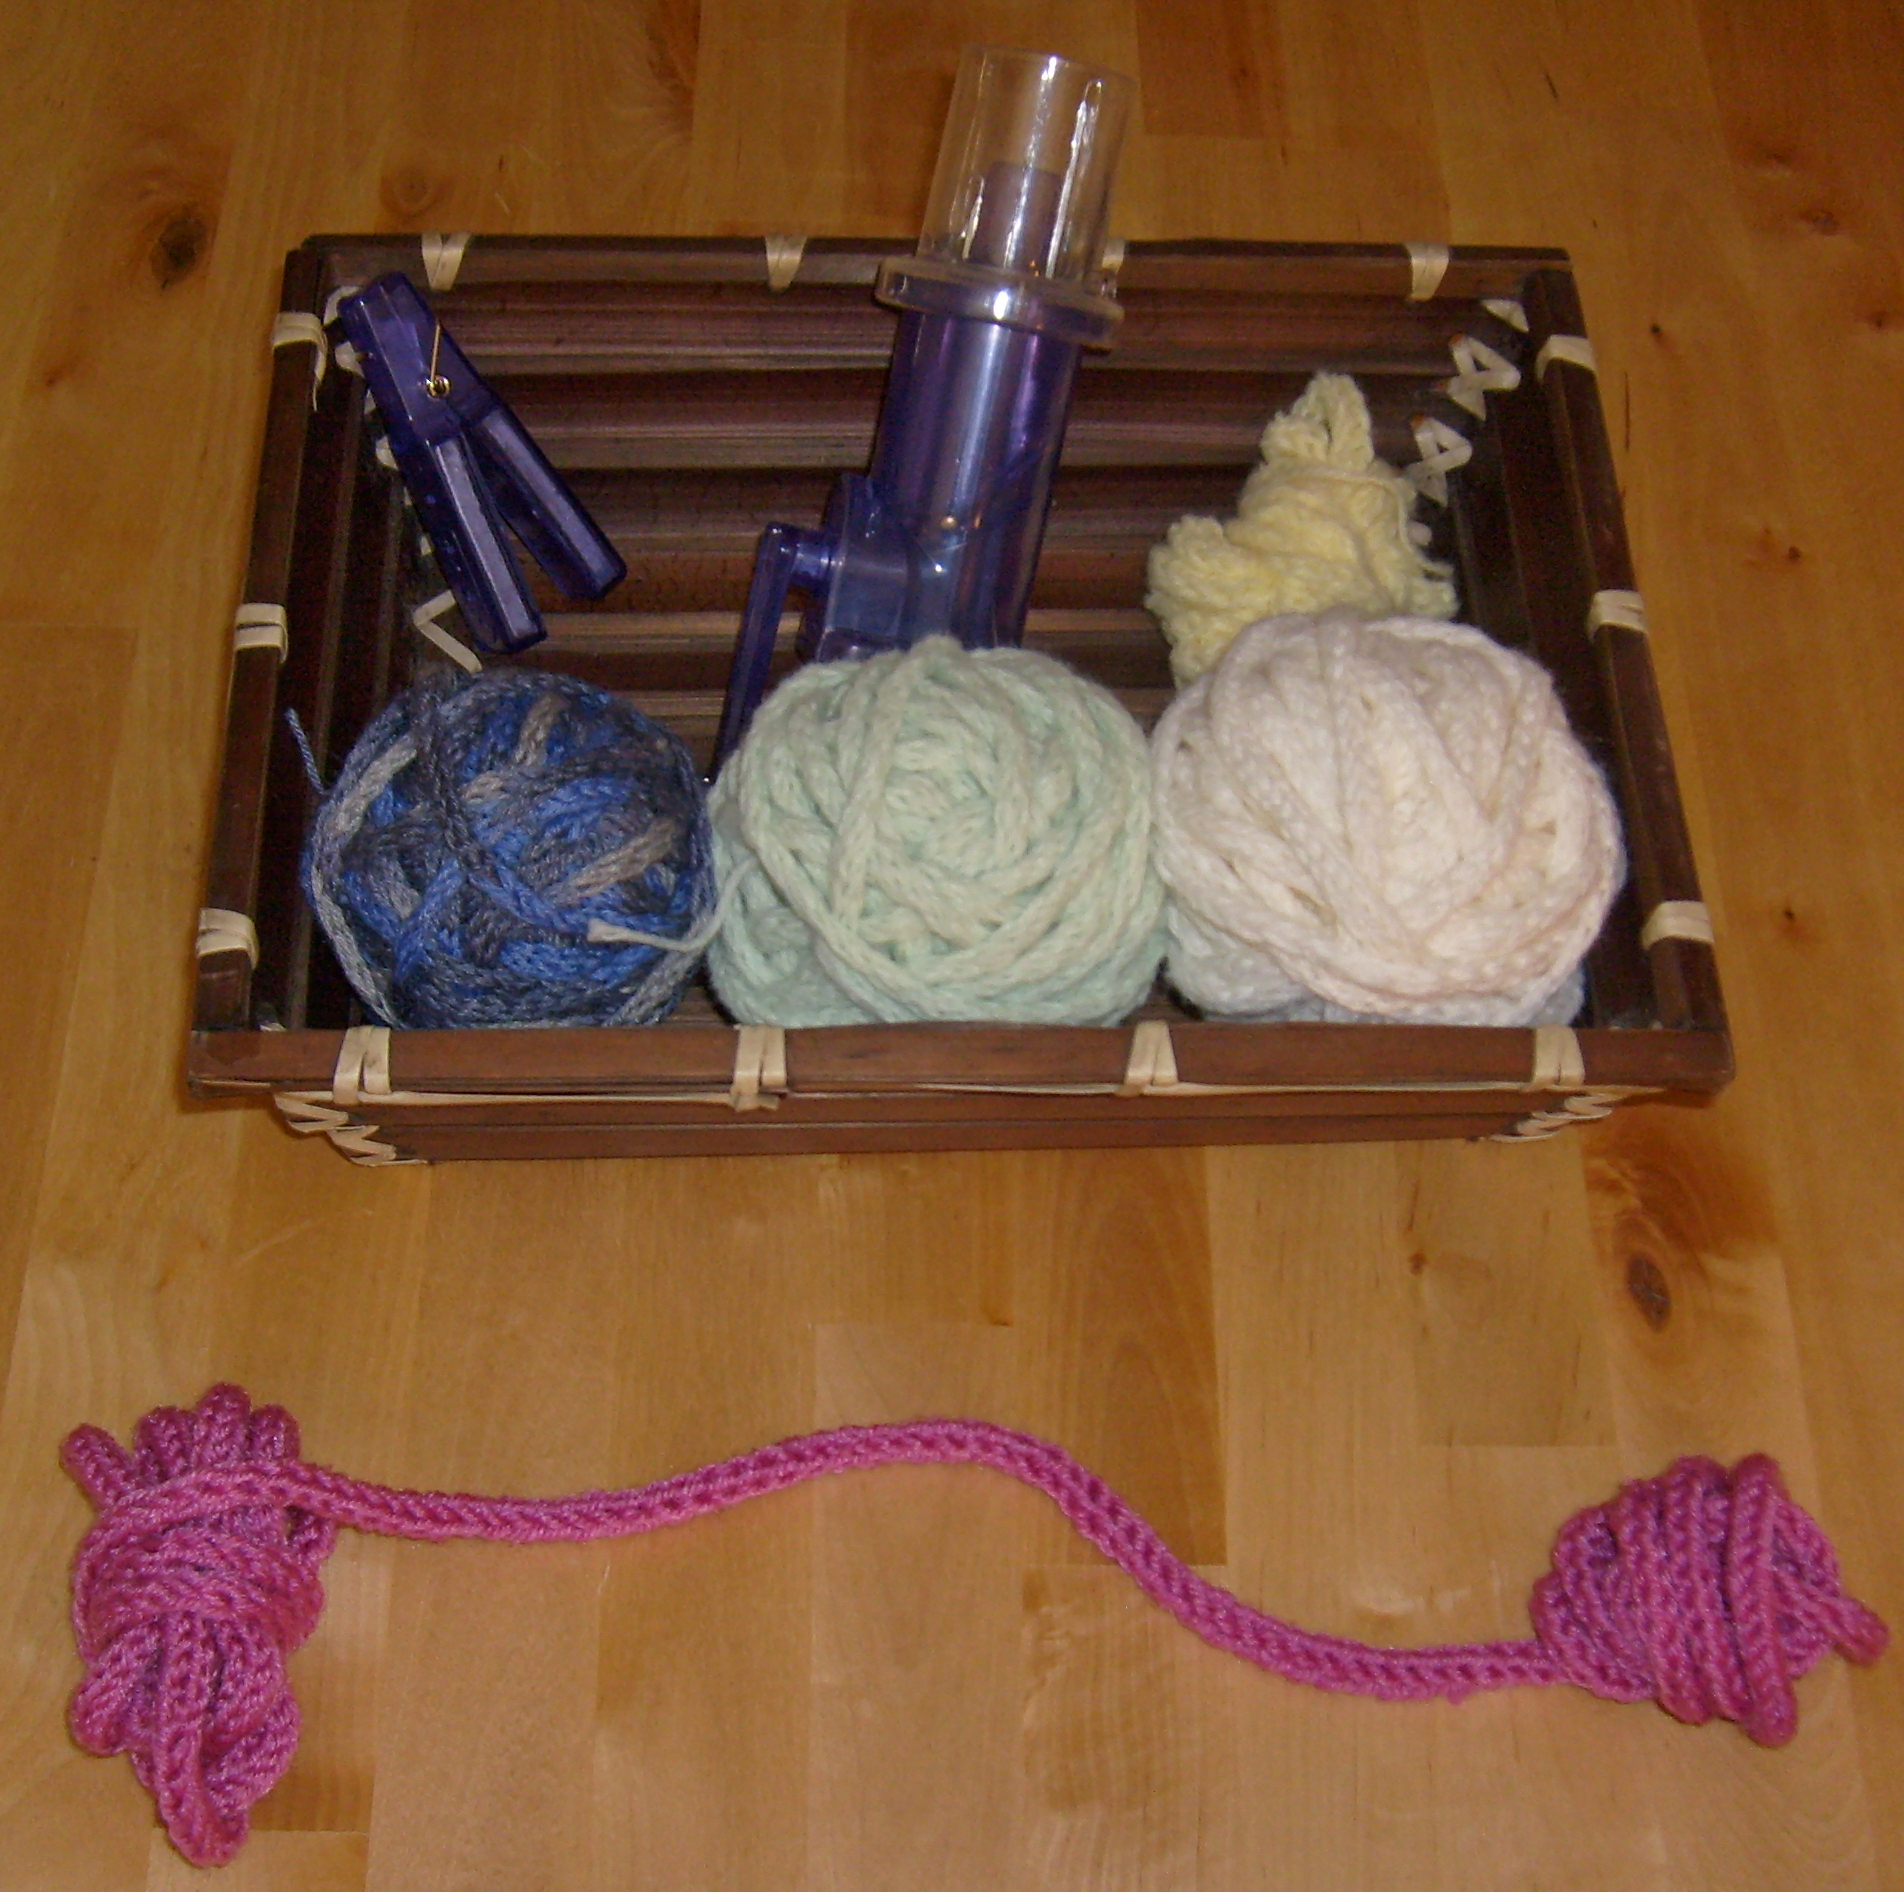 File:Spool knitting machine.jpg - Wikipedia